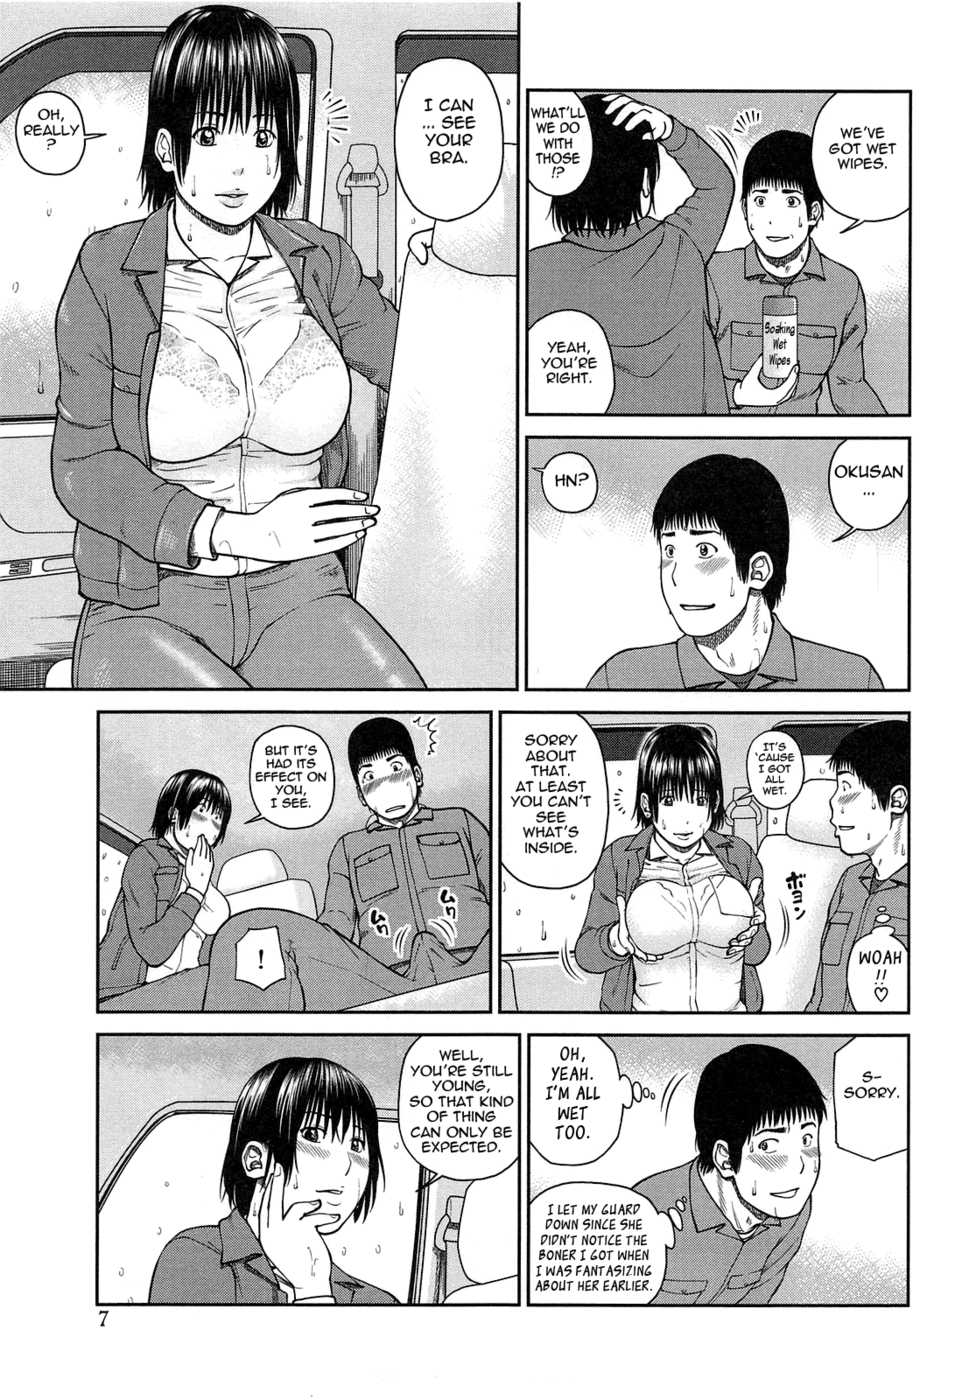 Hentai Manga Comic-35 Year Old Ripe Wife-Chapter 1-Wet Wife (First Half)-9